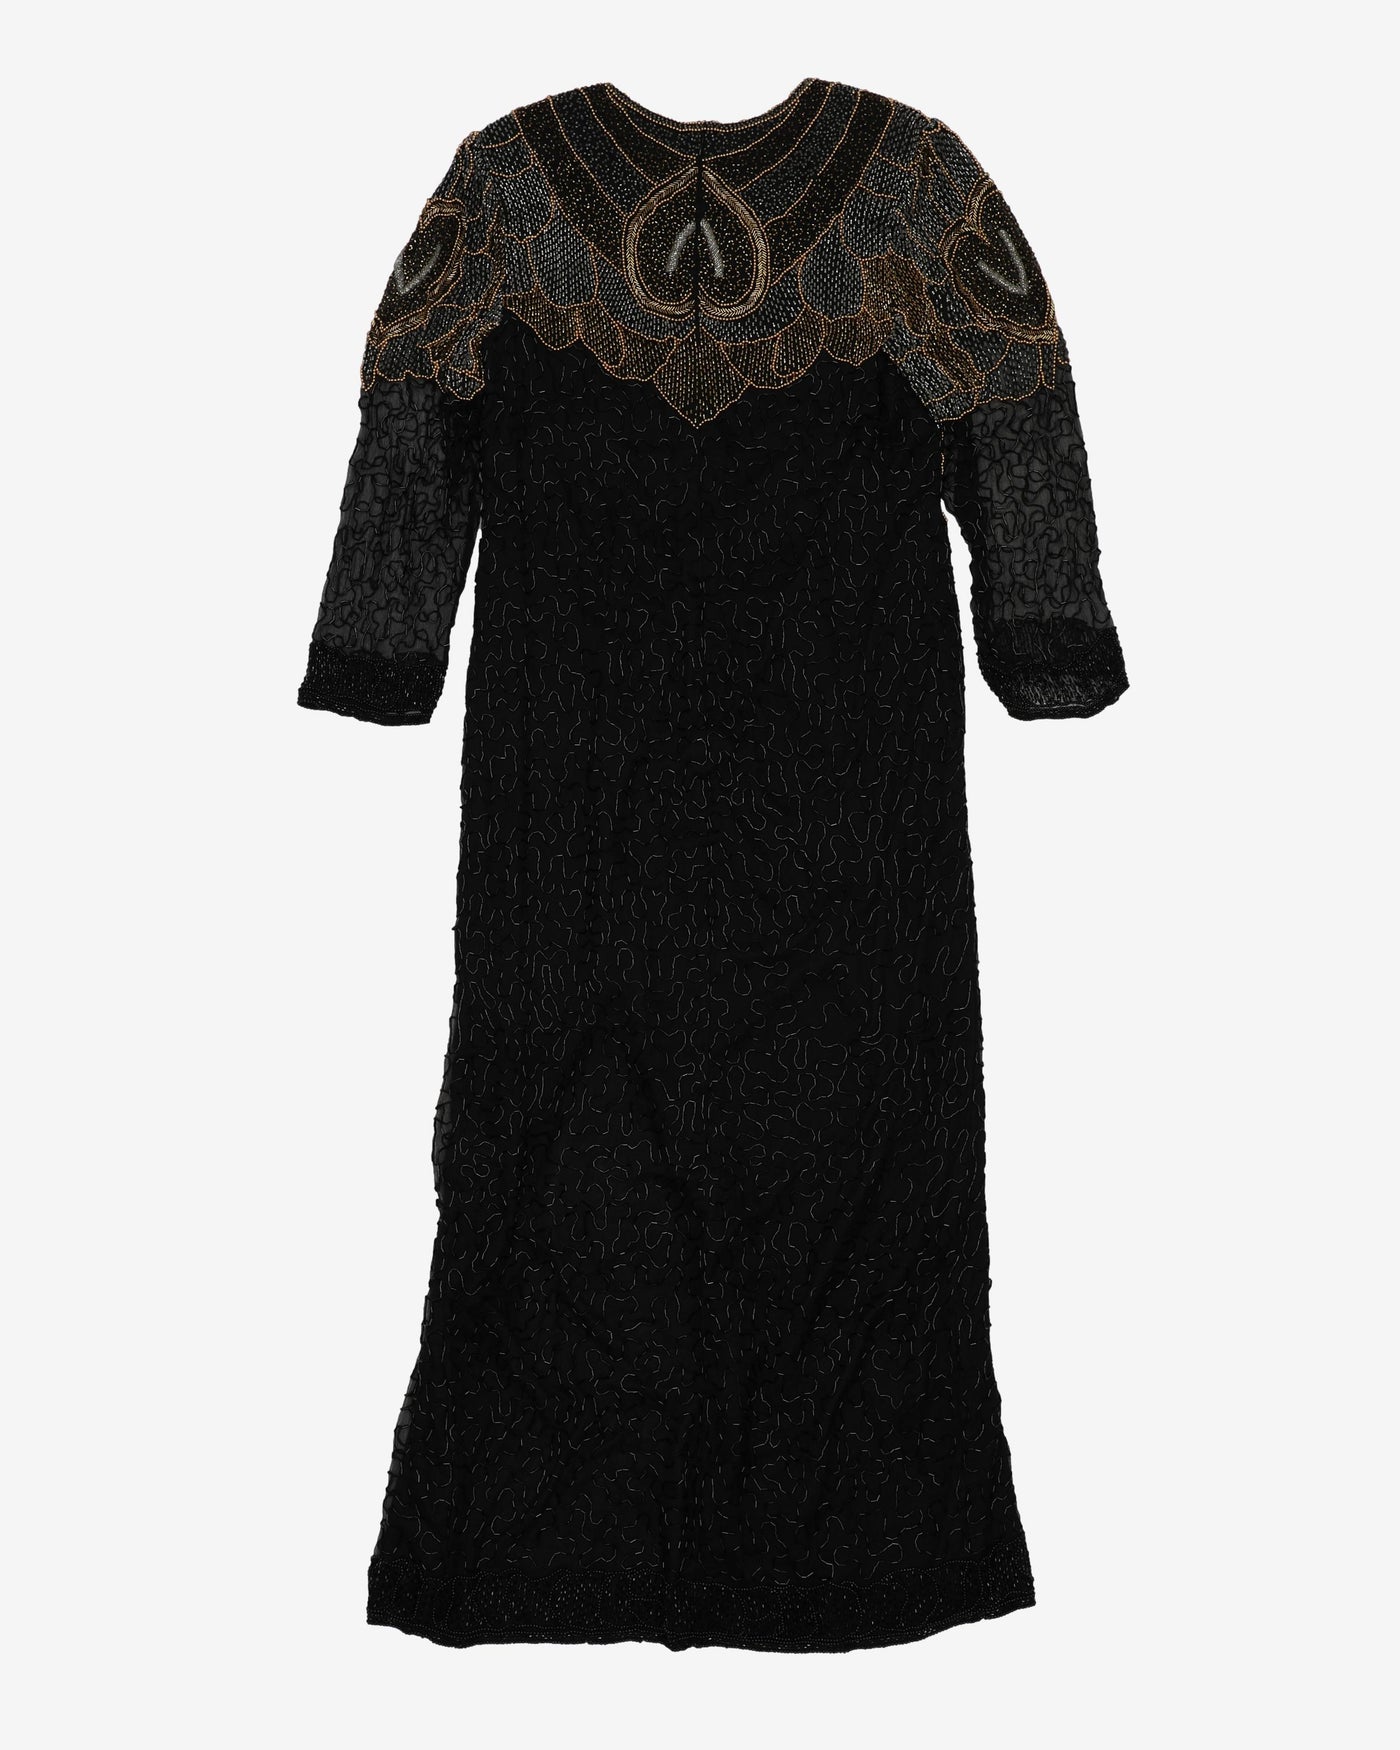 Vintage 90s Black Sequinned Silk Dress - S